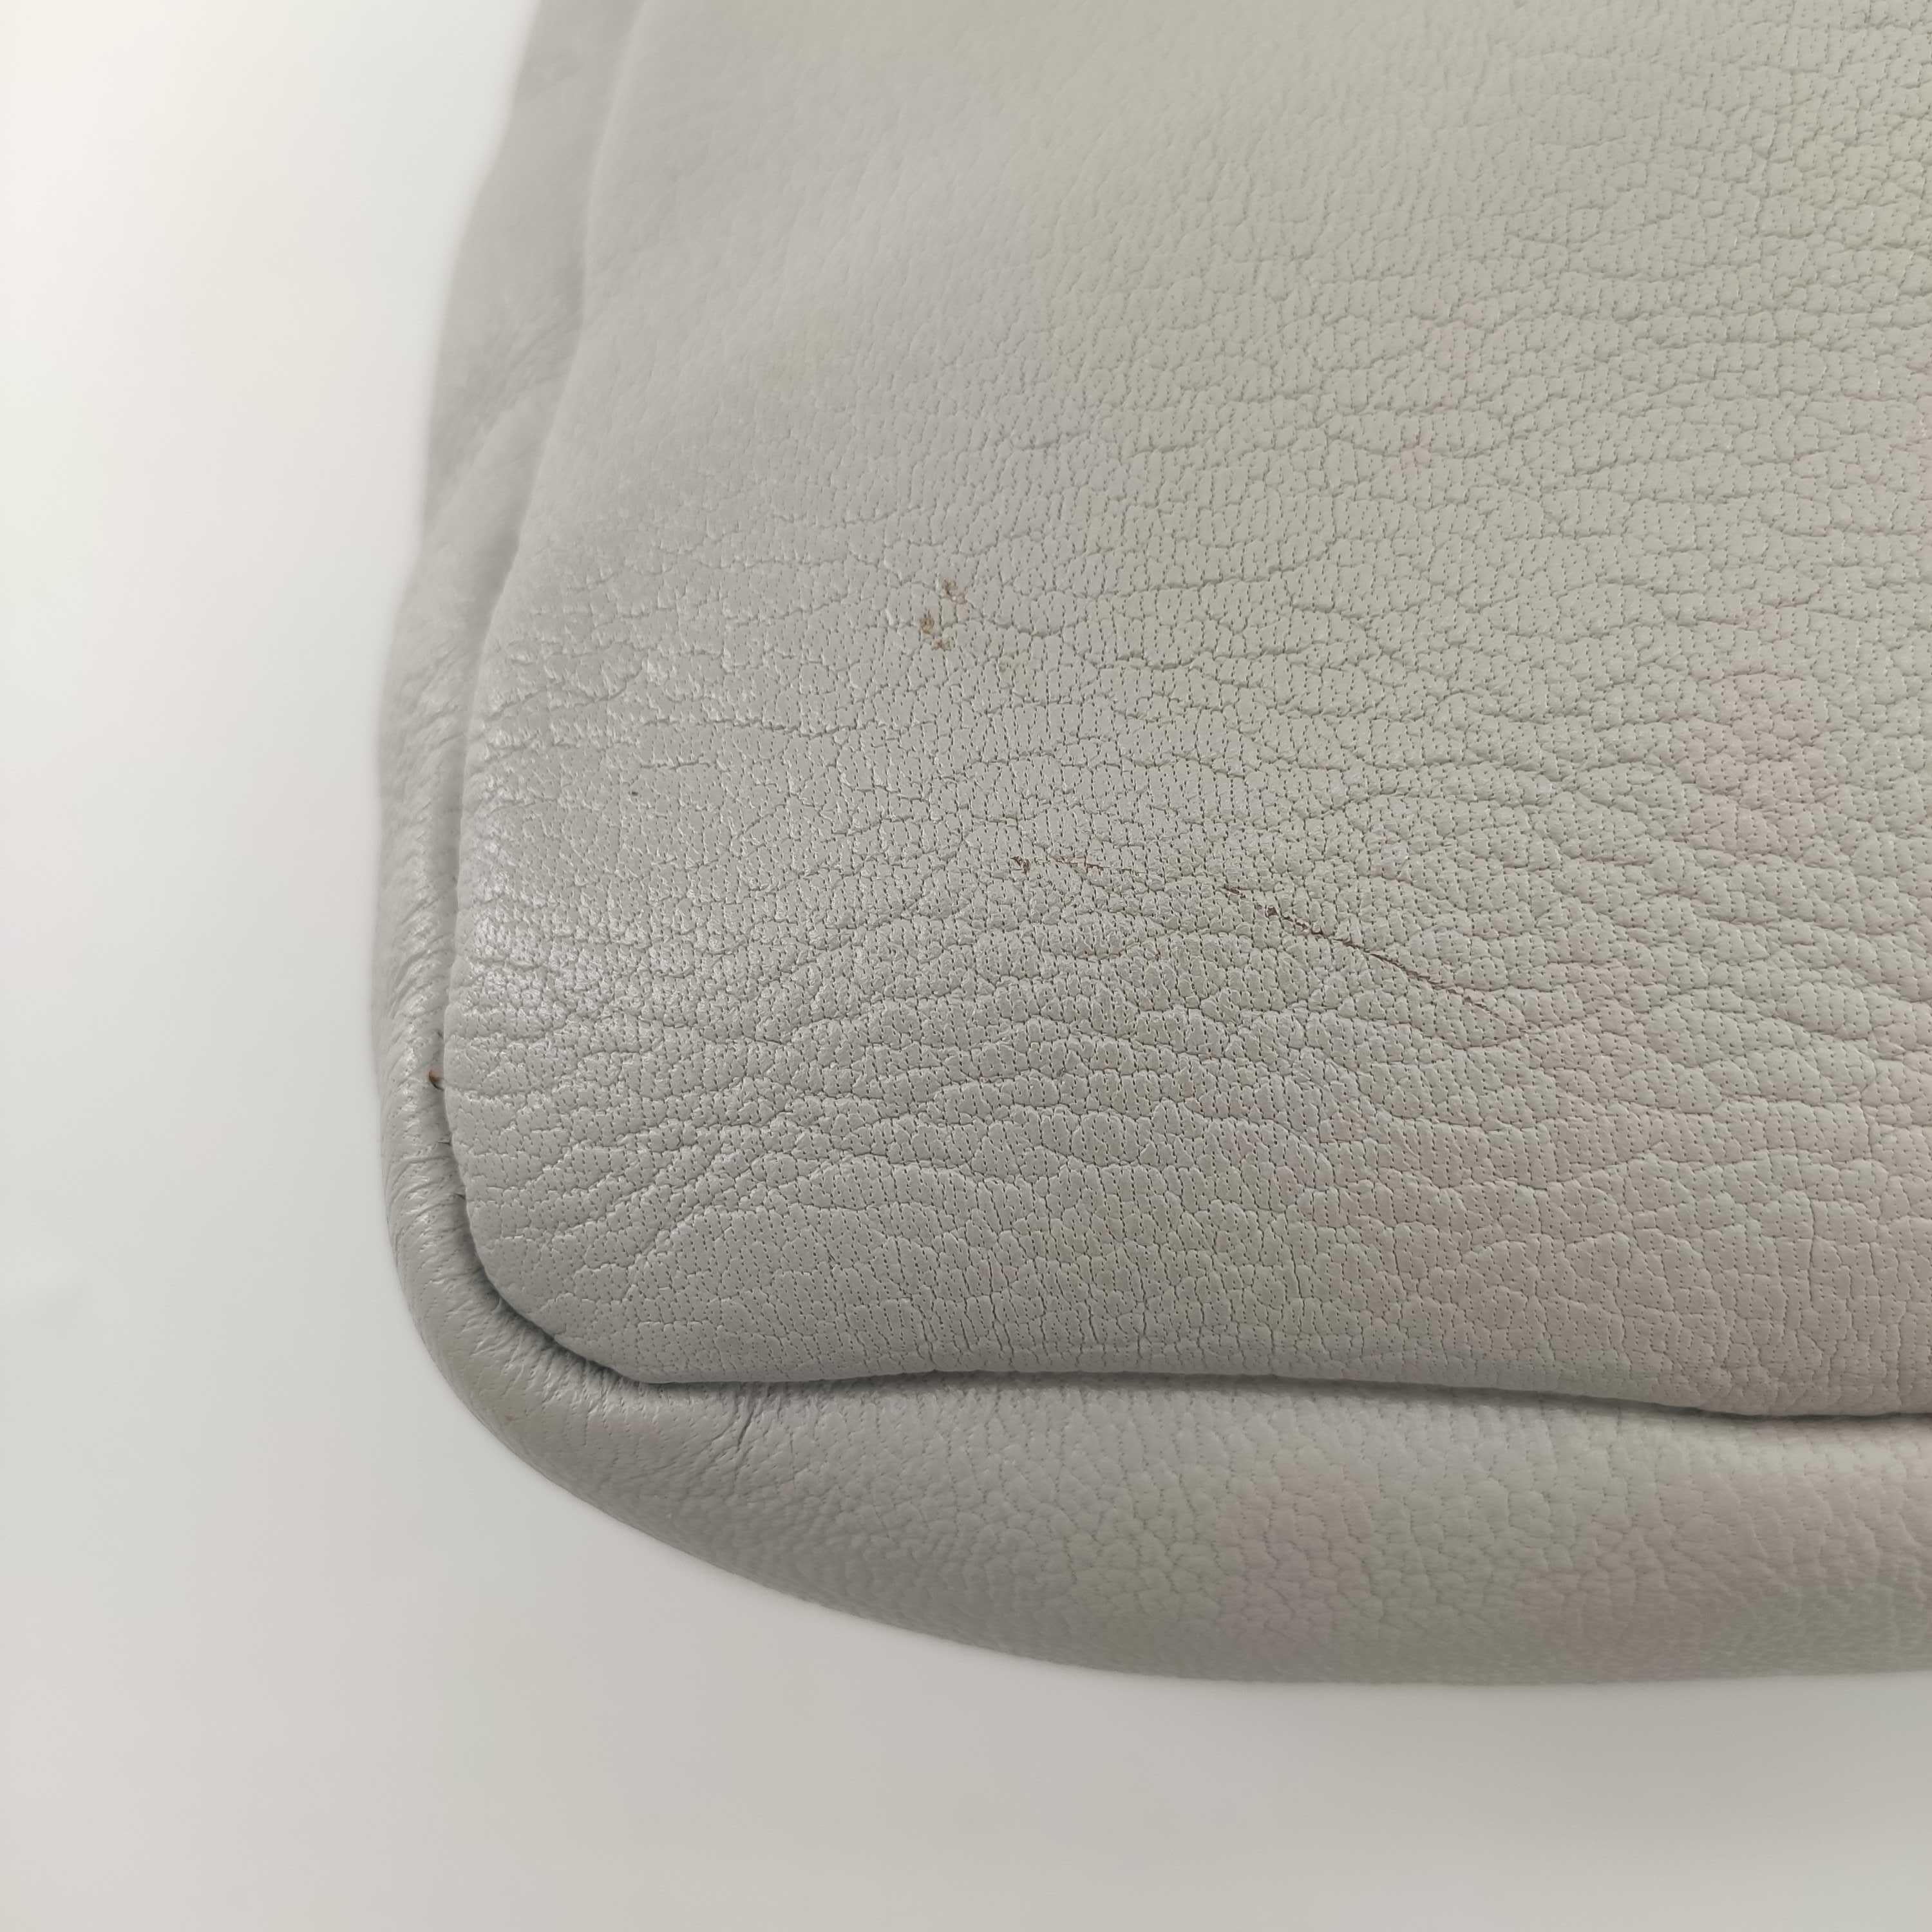 BALENCIAGA First Shoulder bag in Beige Leather 6